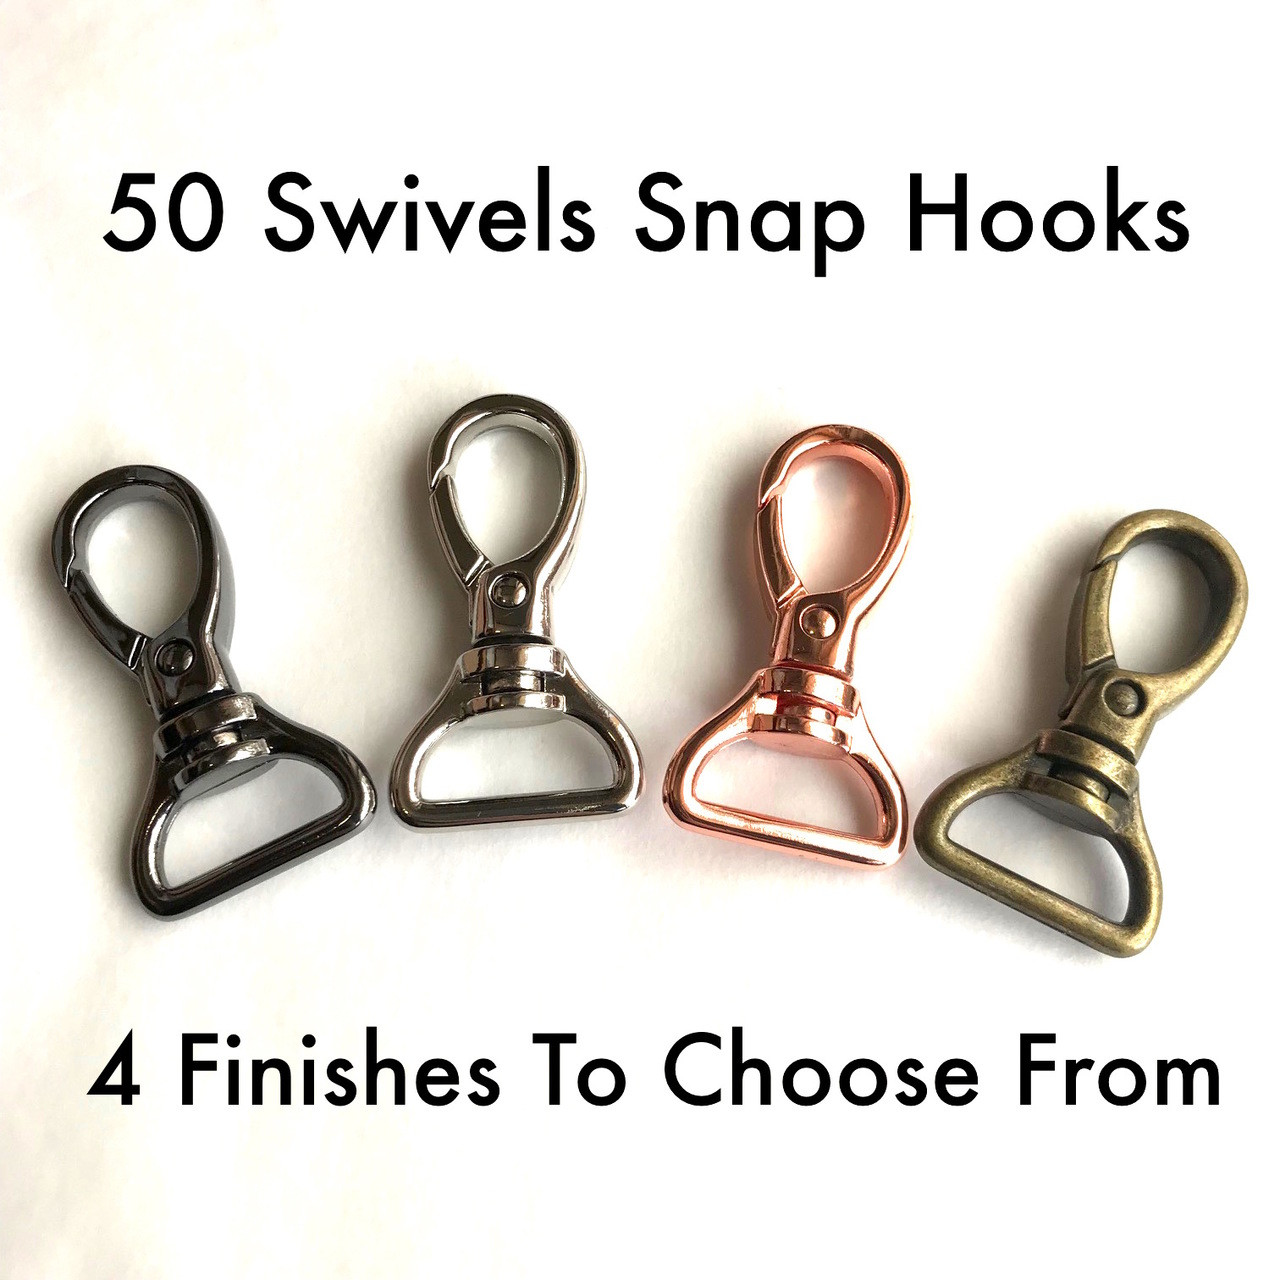 BULK 50 pcs* Small Swivel Snap Hooks in Gunmetal, Silver, Antique